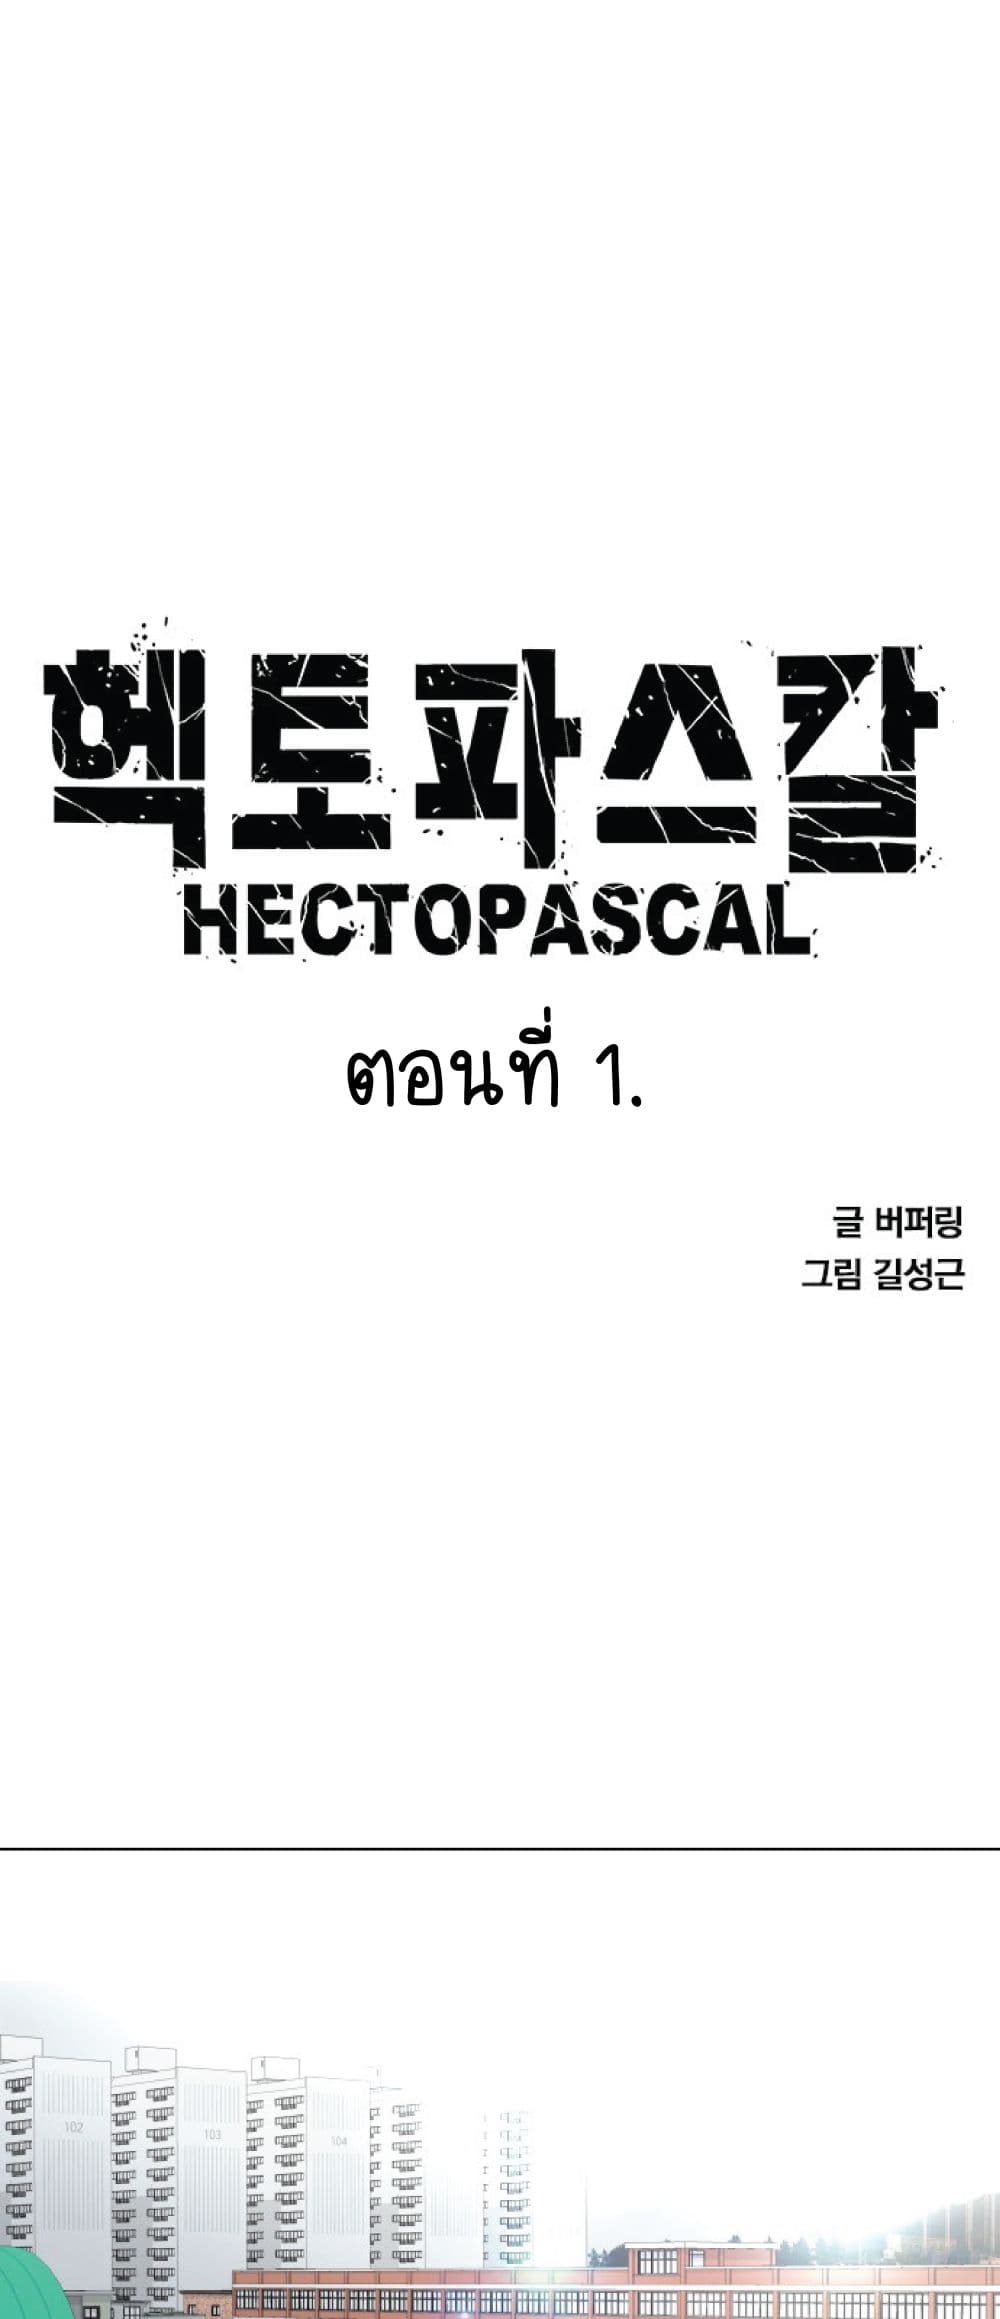 Hectopascals ตอนที่ 1 (1)